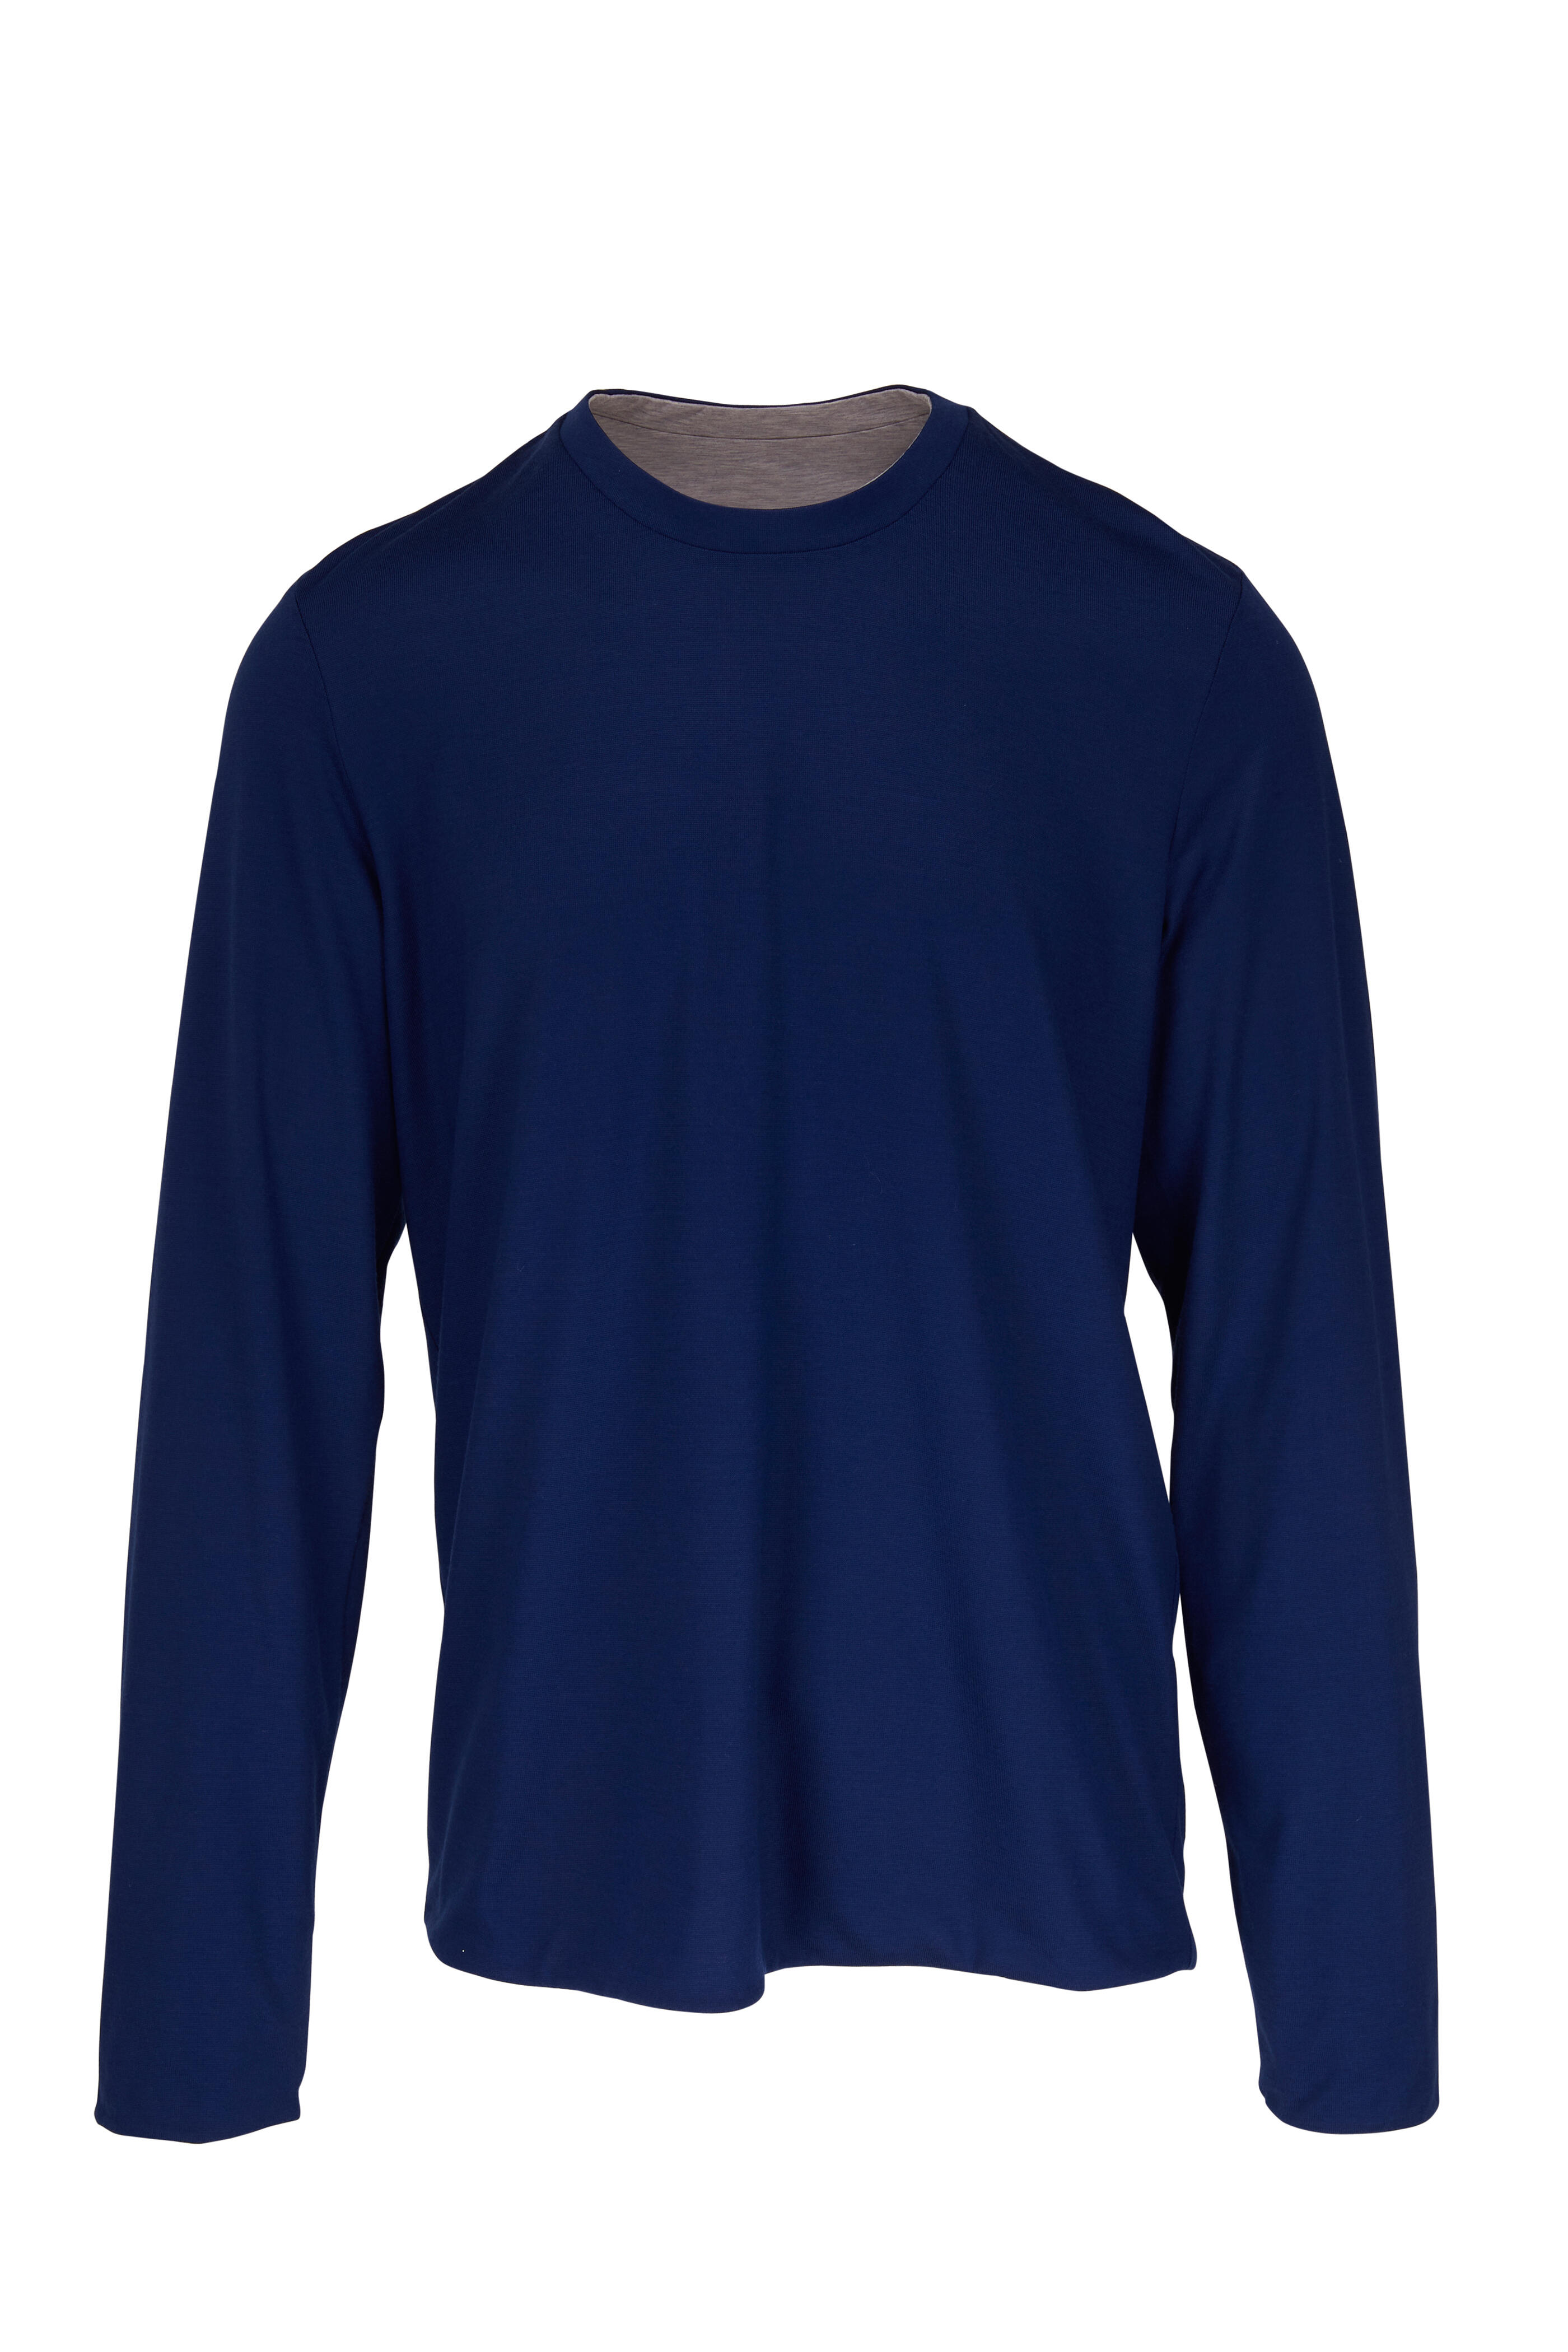 Sease - Navy & Gray Reversible Long Sleeve Crewneck Shirt